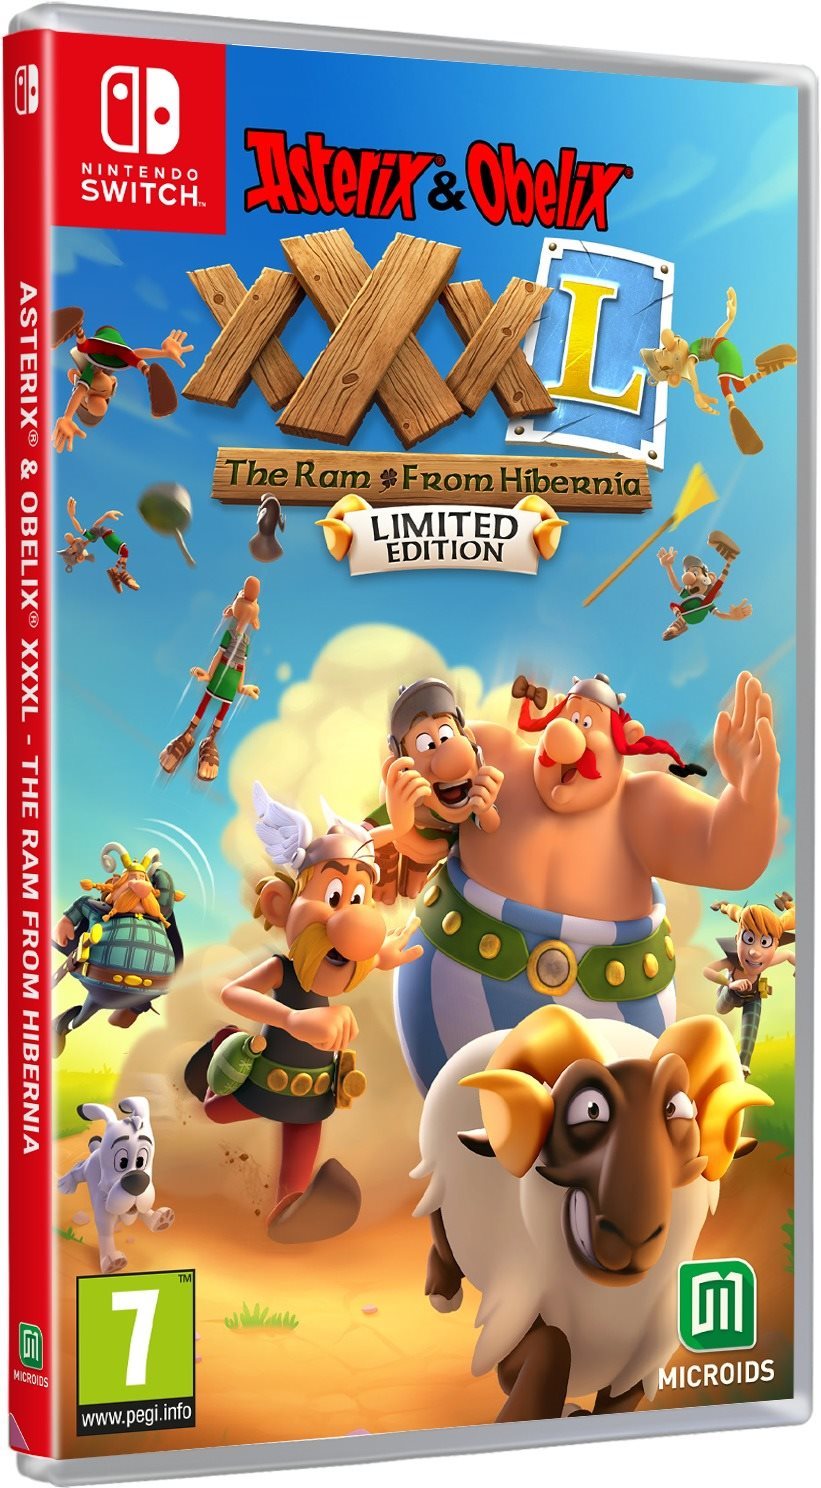 Asterix & Obelix XXXL: The Ram From Hibernia Limited Edition - Nintendo Switch